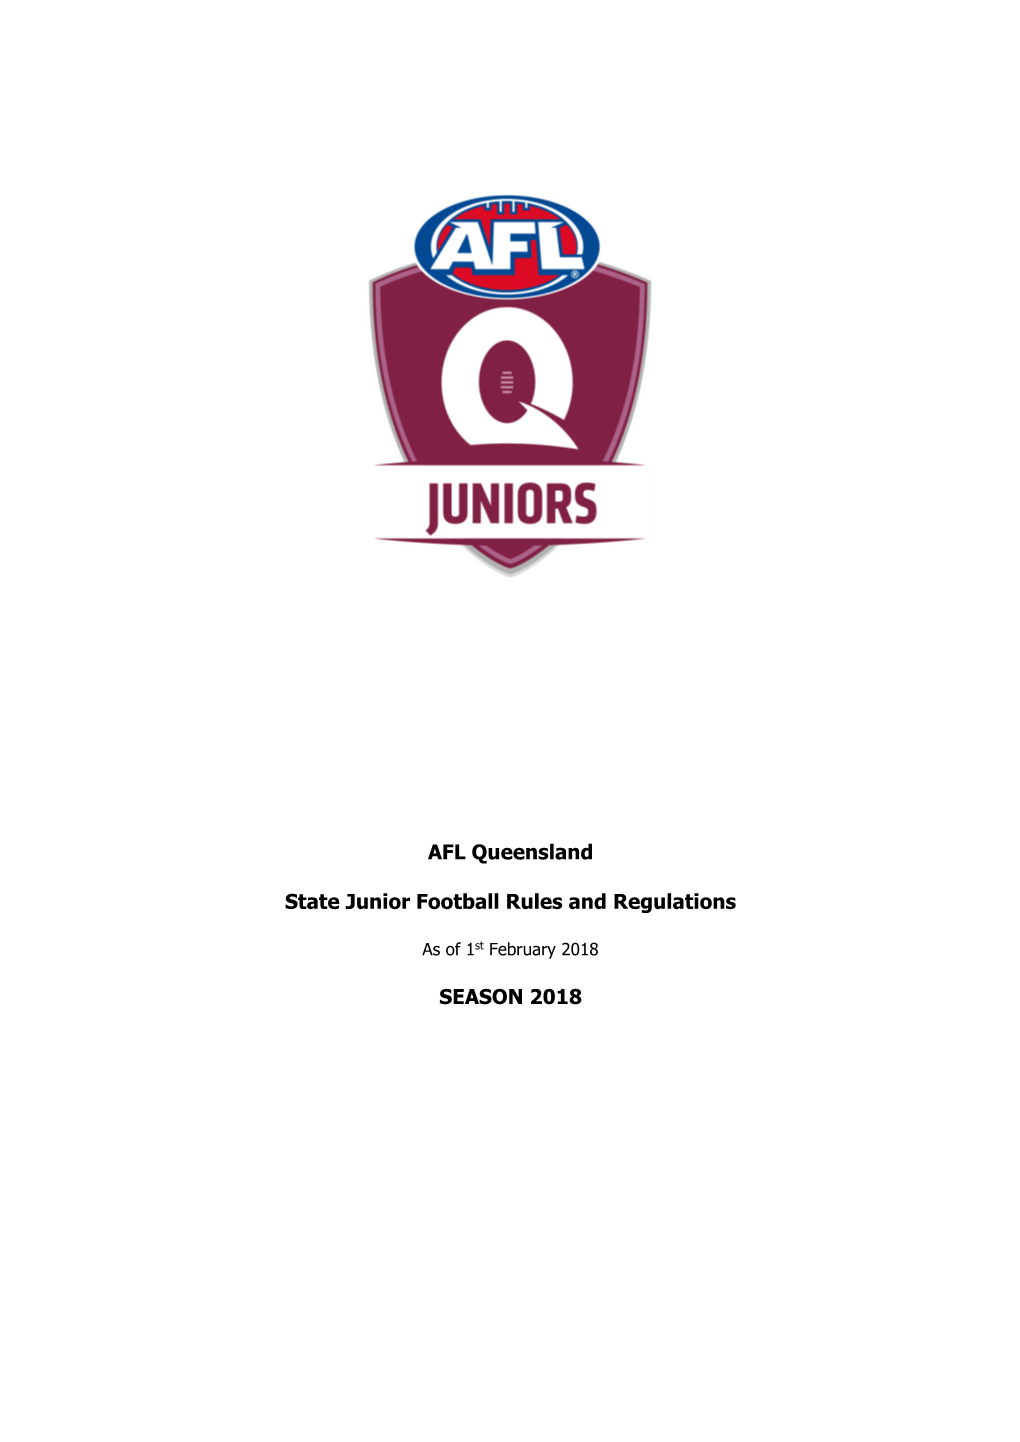 AFL Queensland State Junior Football Rules and Regulations SEASON